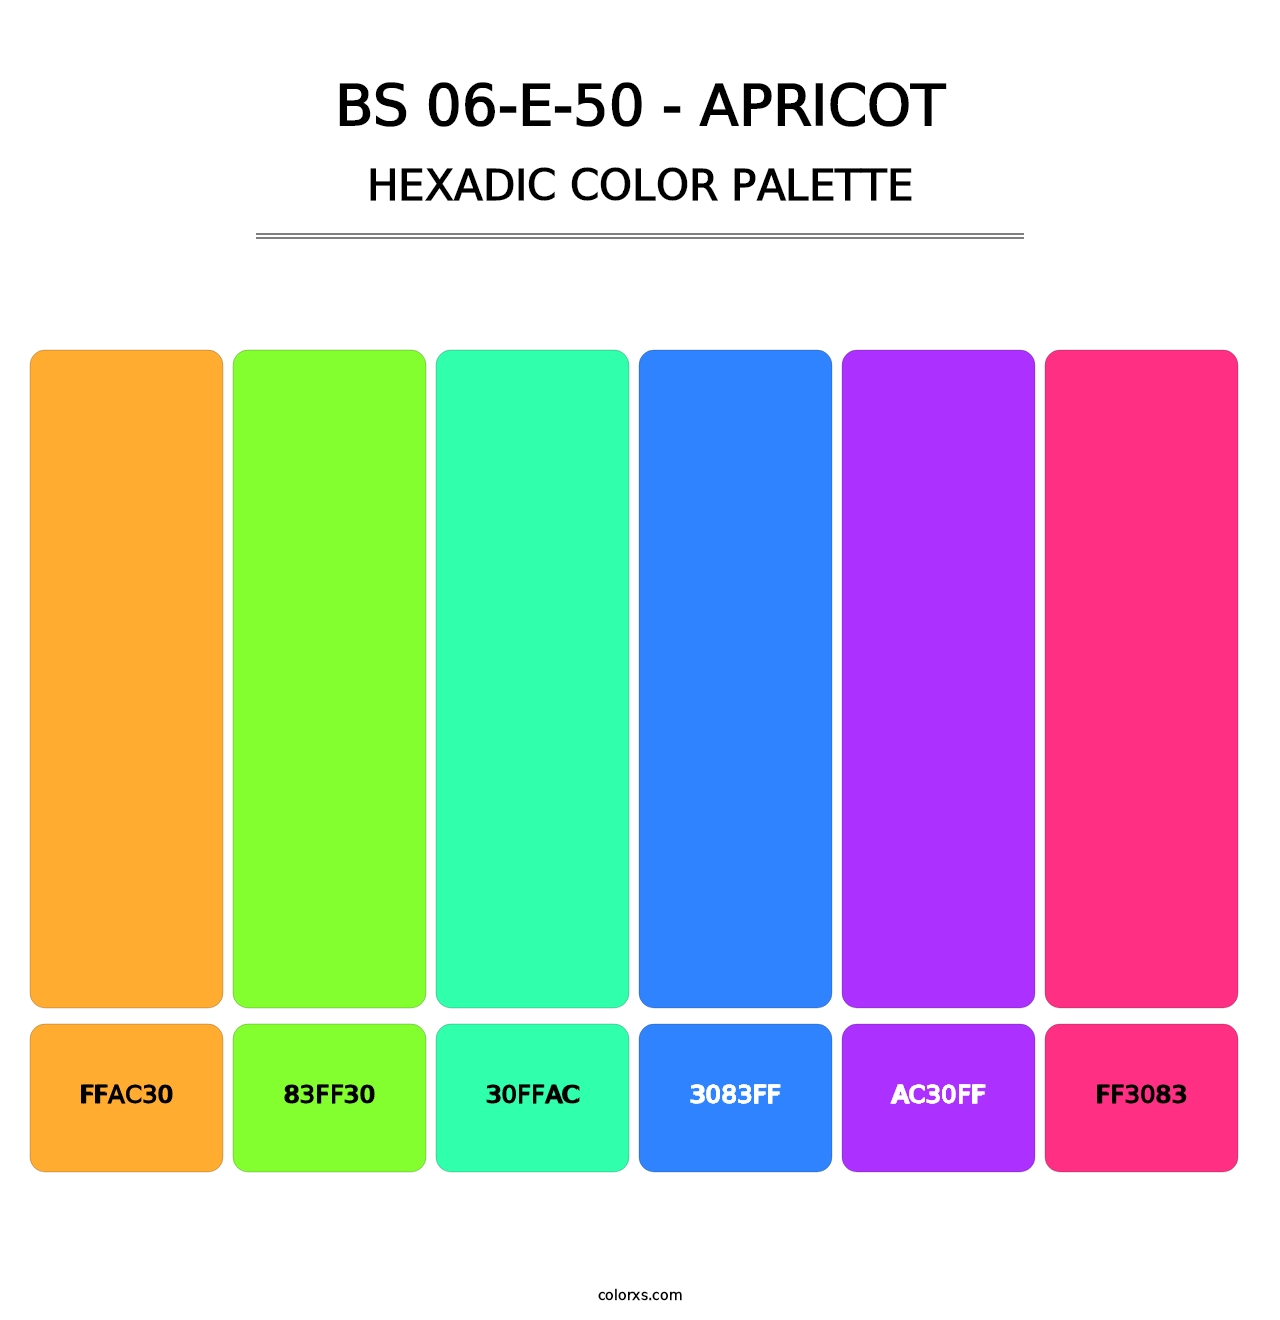 BS 06-E-50 - Apricot - Hexadic Color Palette